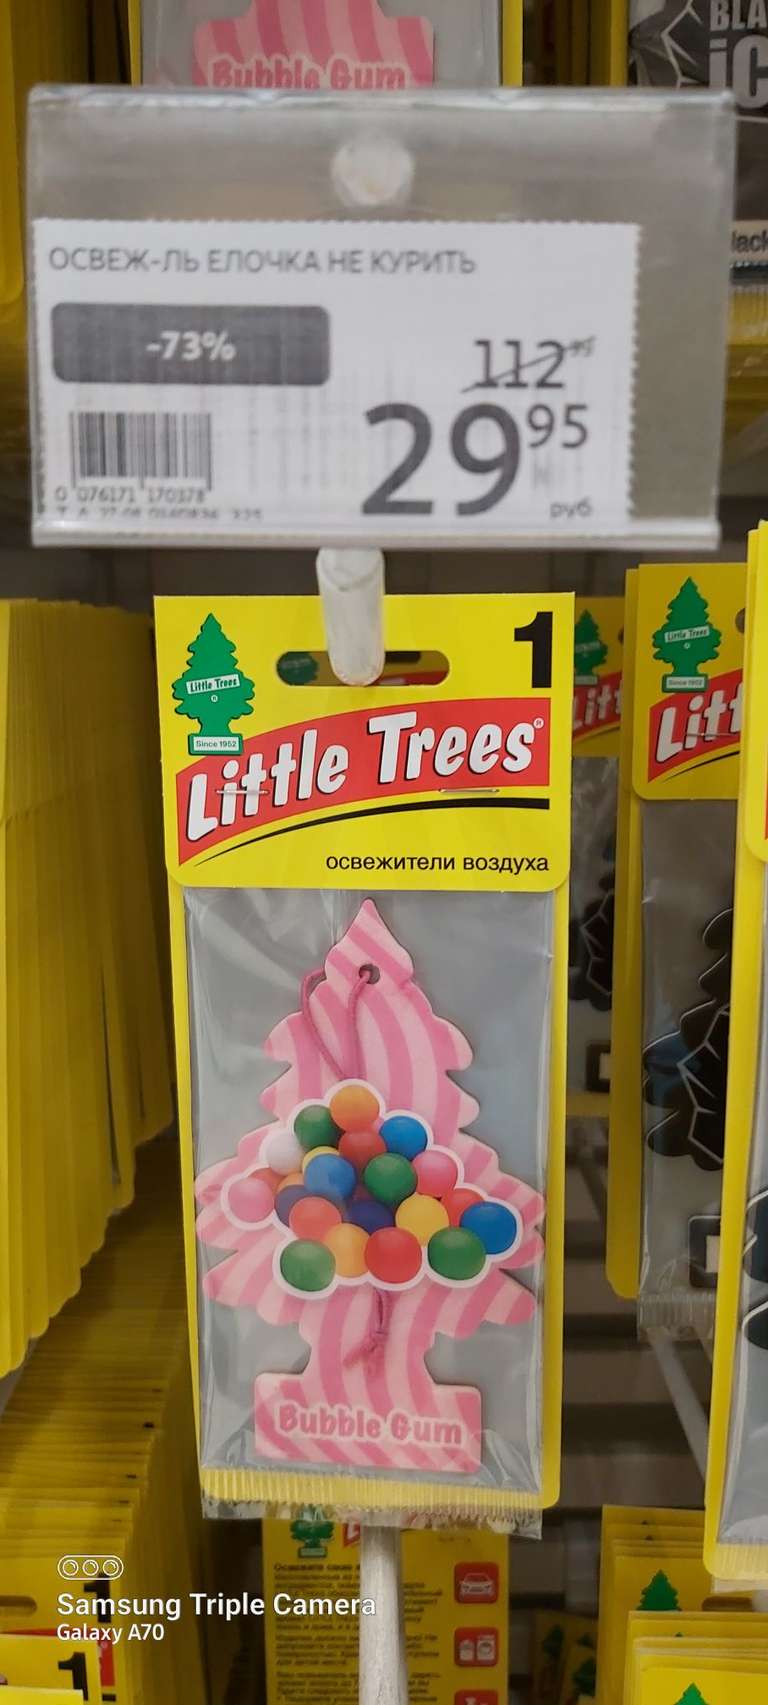 [Москва] Ароматизатор Ёлочка LITTLE TREES "Бабл гам" (Bubble Gum)